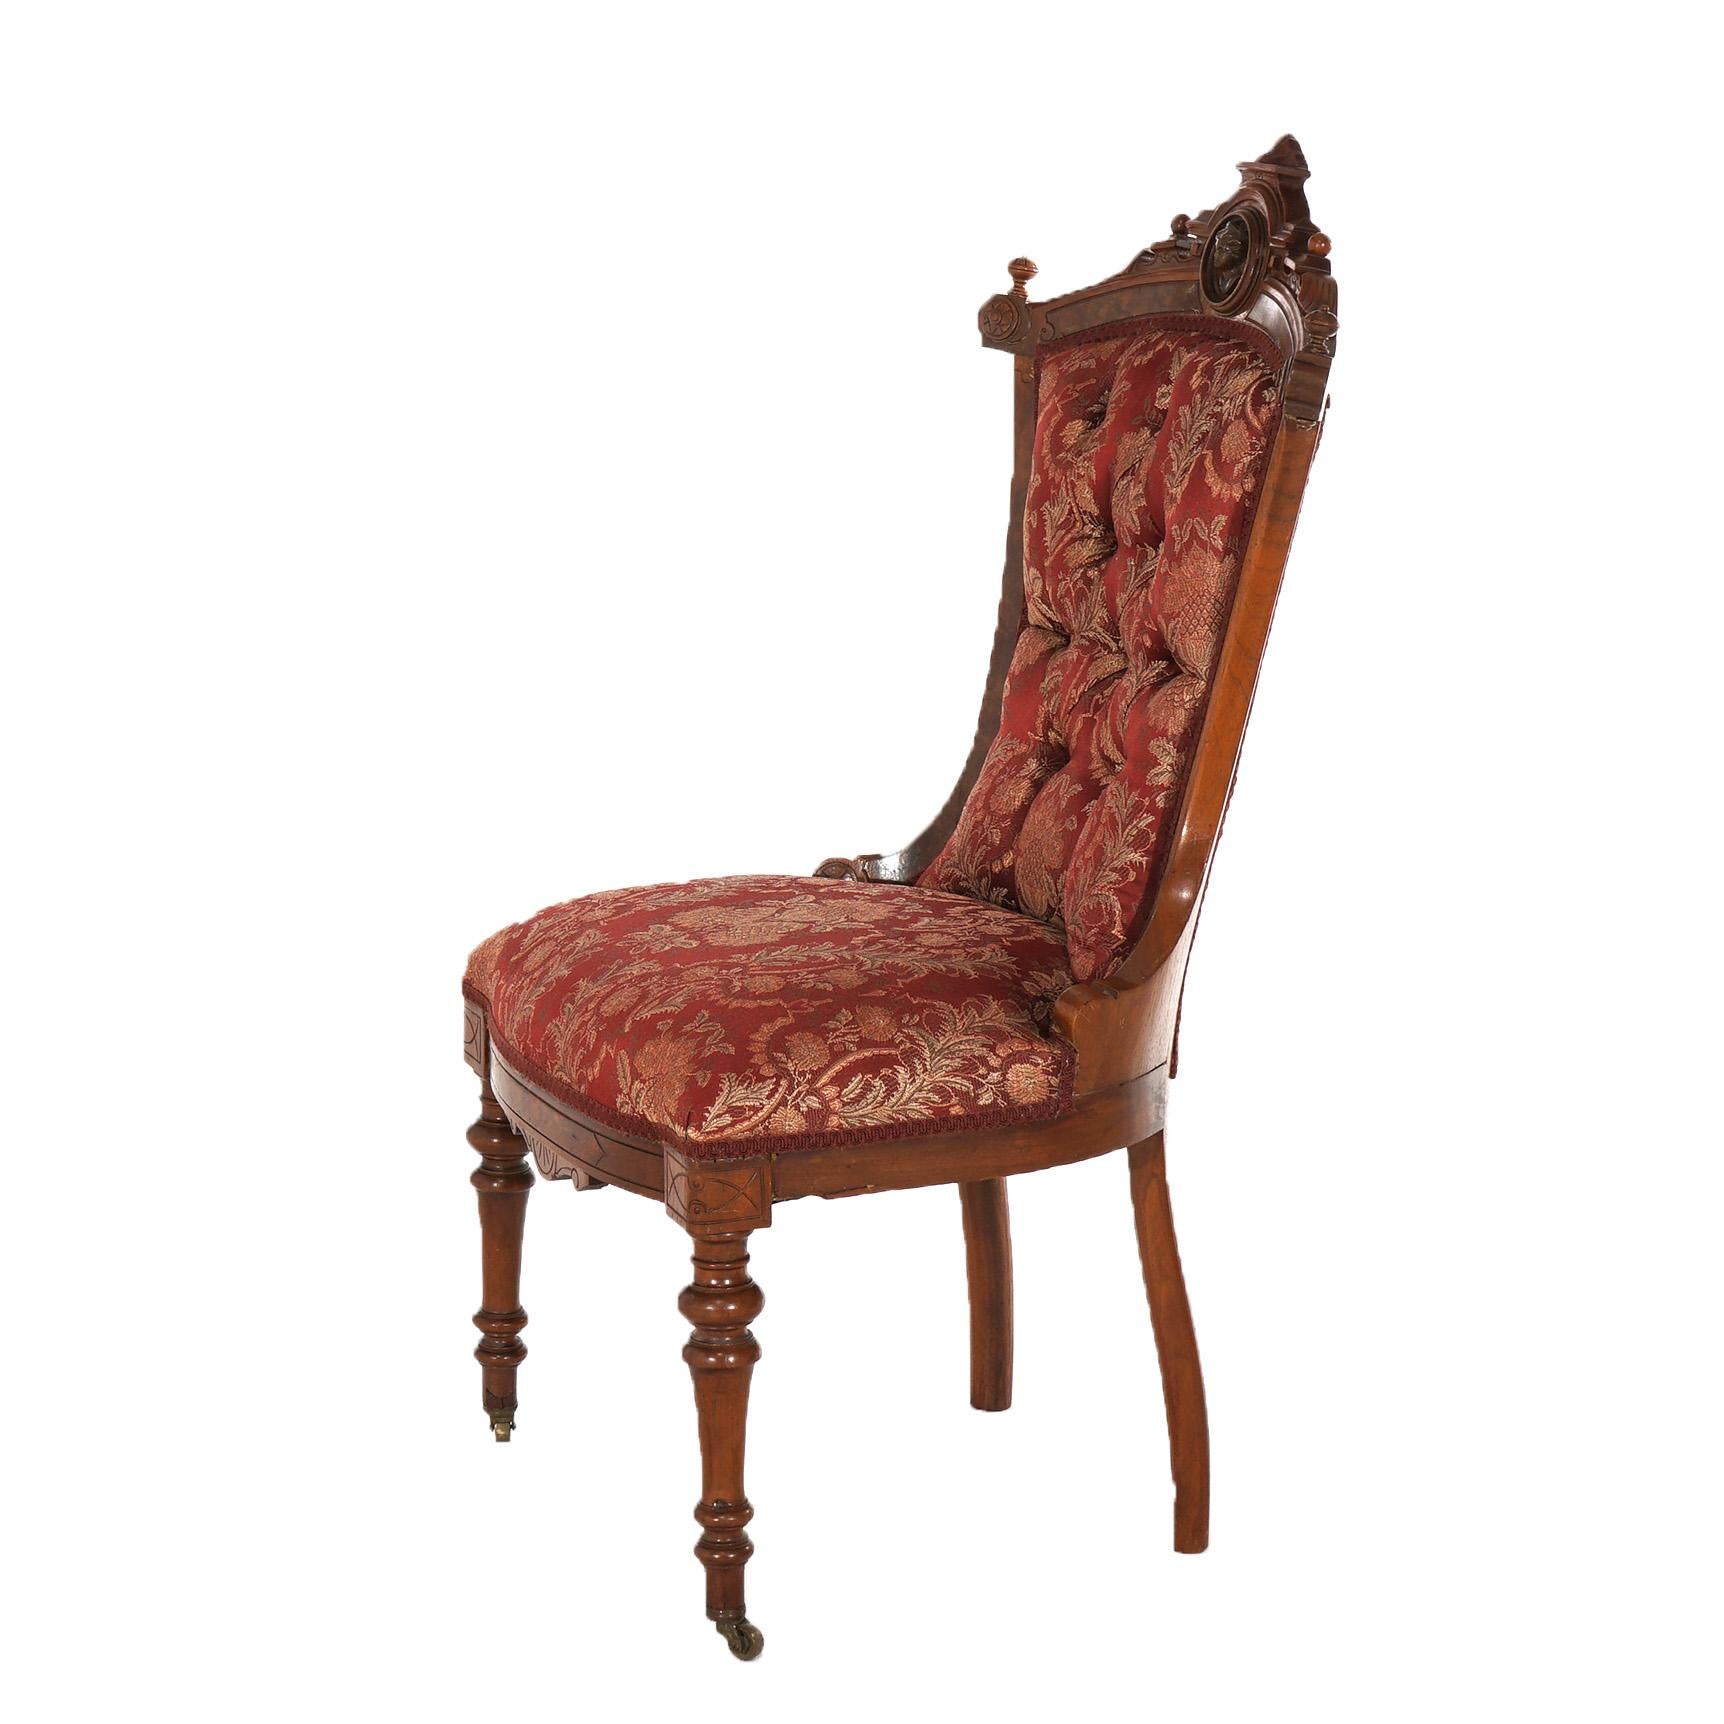 Antique John Jelliff Renaissance Revival Carved Walnut Side Chair C1880 For Sale 3